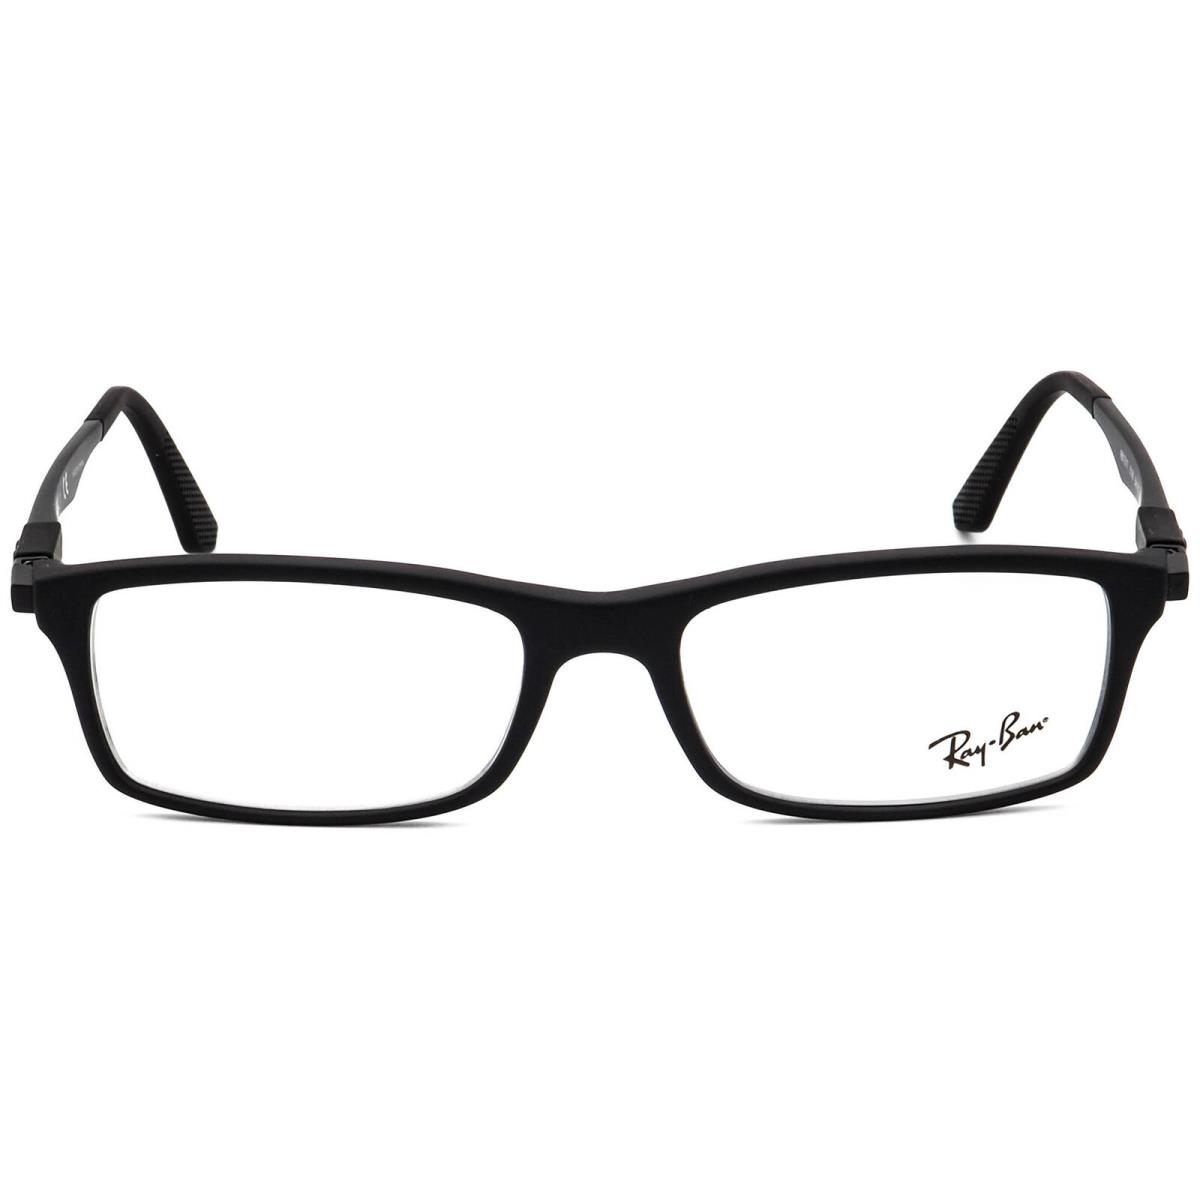 Ray-ban Eyeglasses RB 7017 5196 Matte Black Rectangular Frame 54 17 145